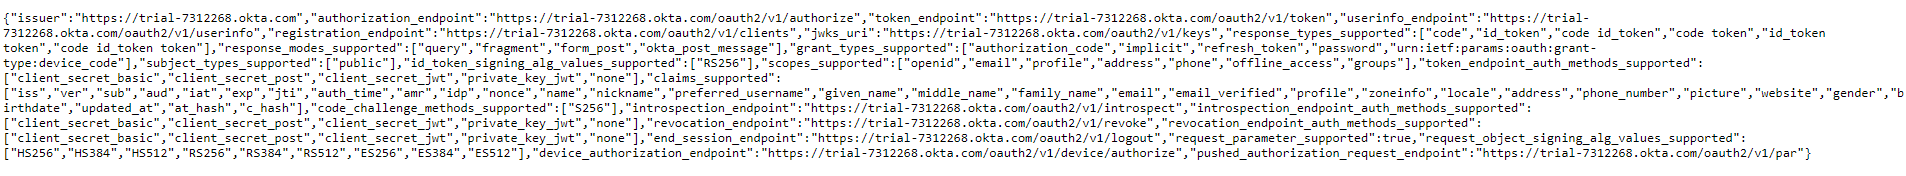 Okta_Open_ID_MetaData.PNG